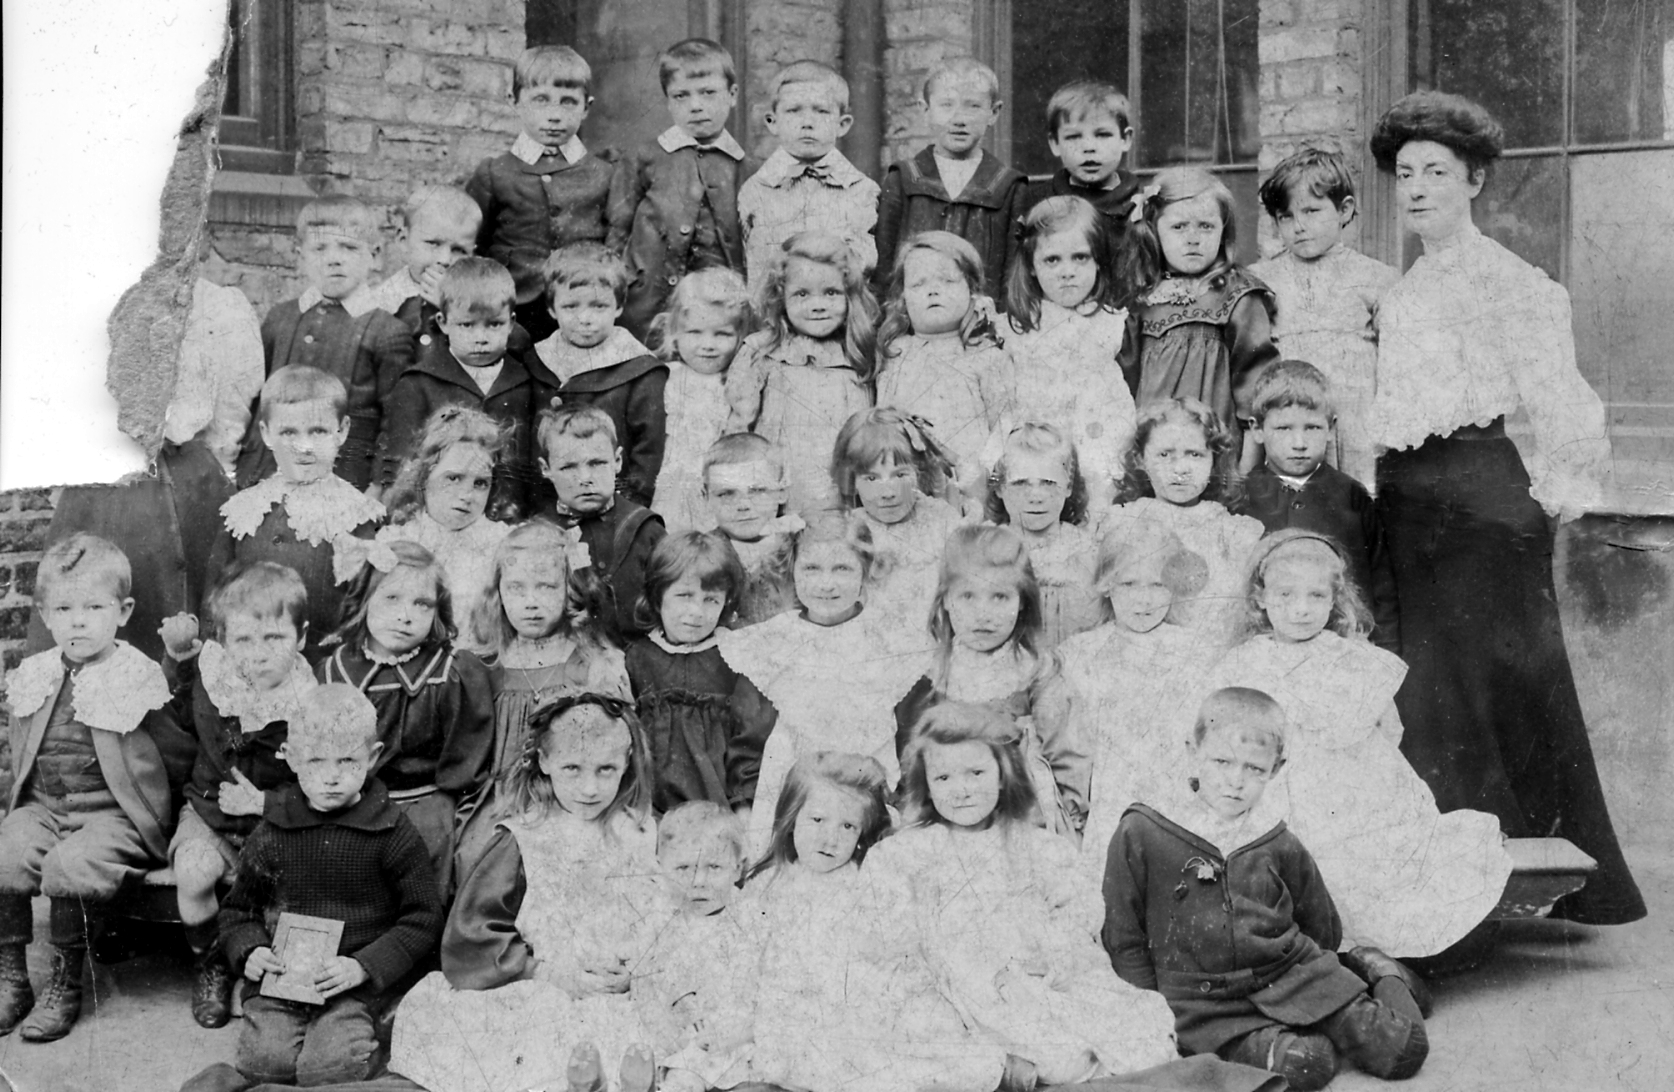 Scarcroft School class c1904 or 1905